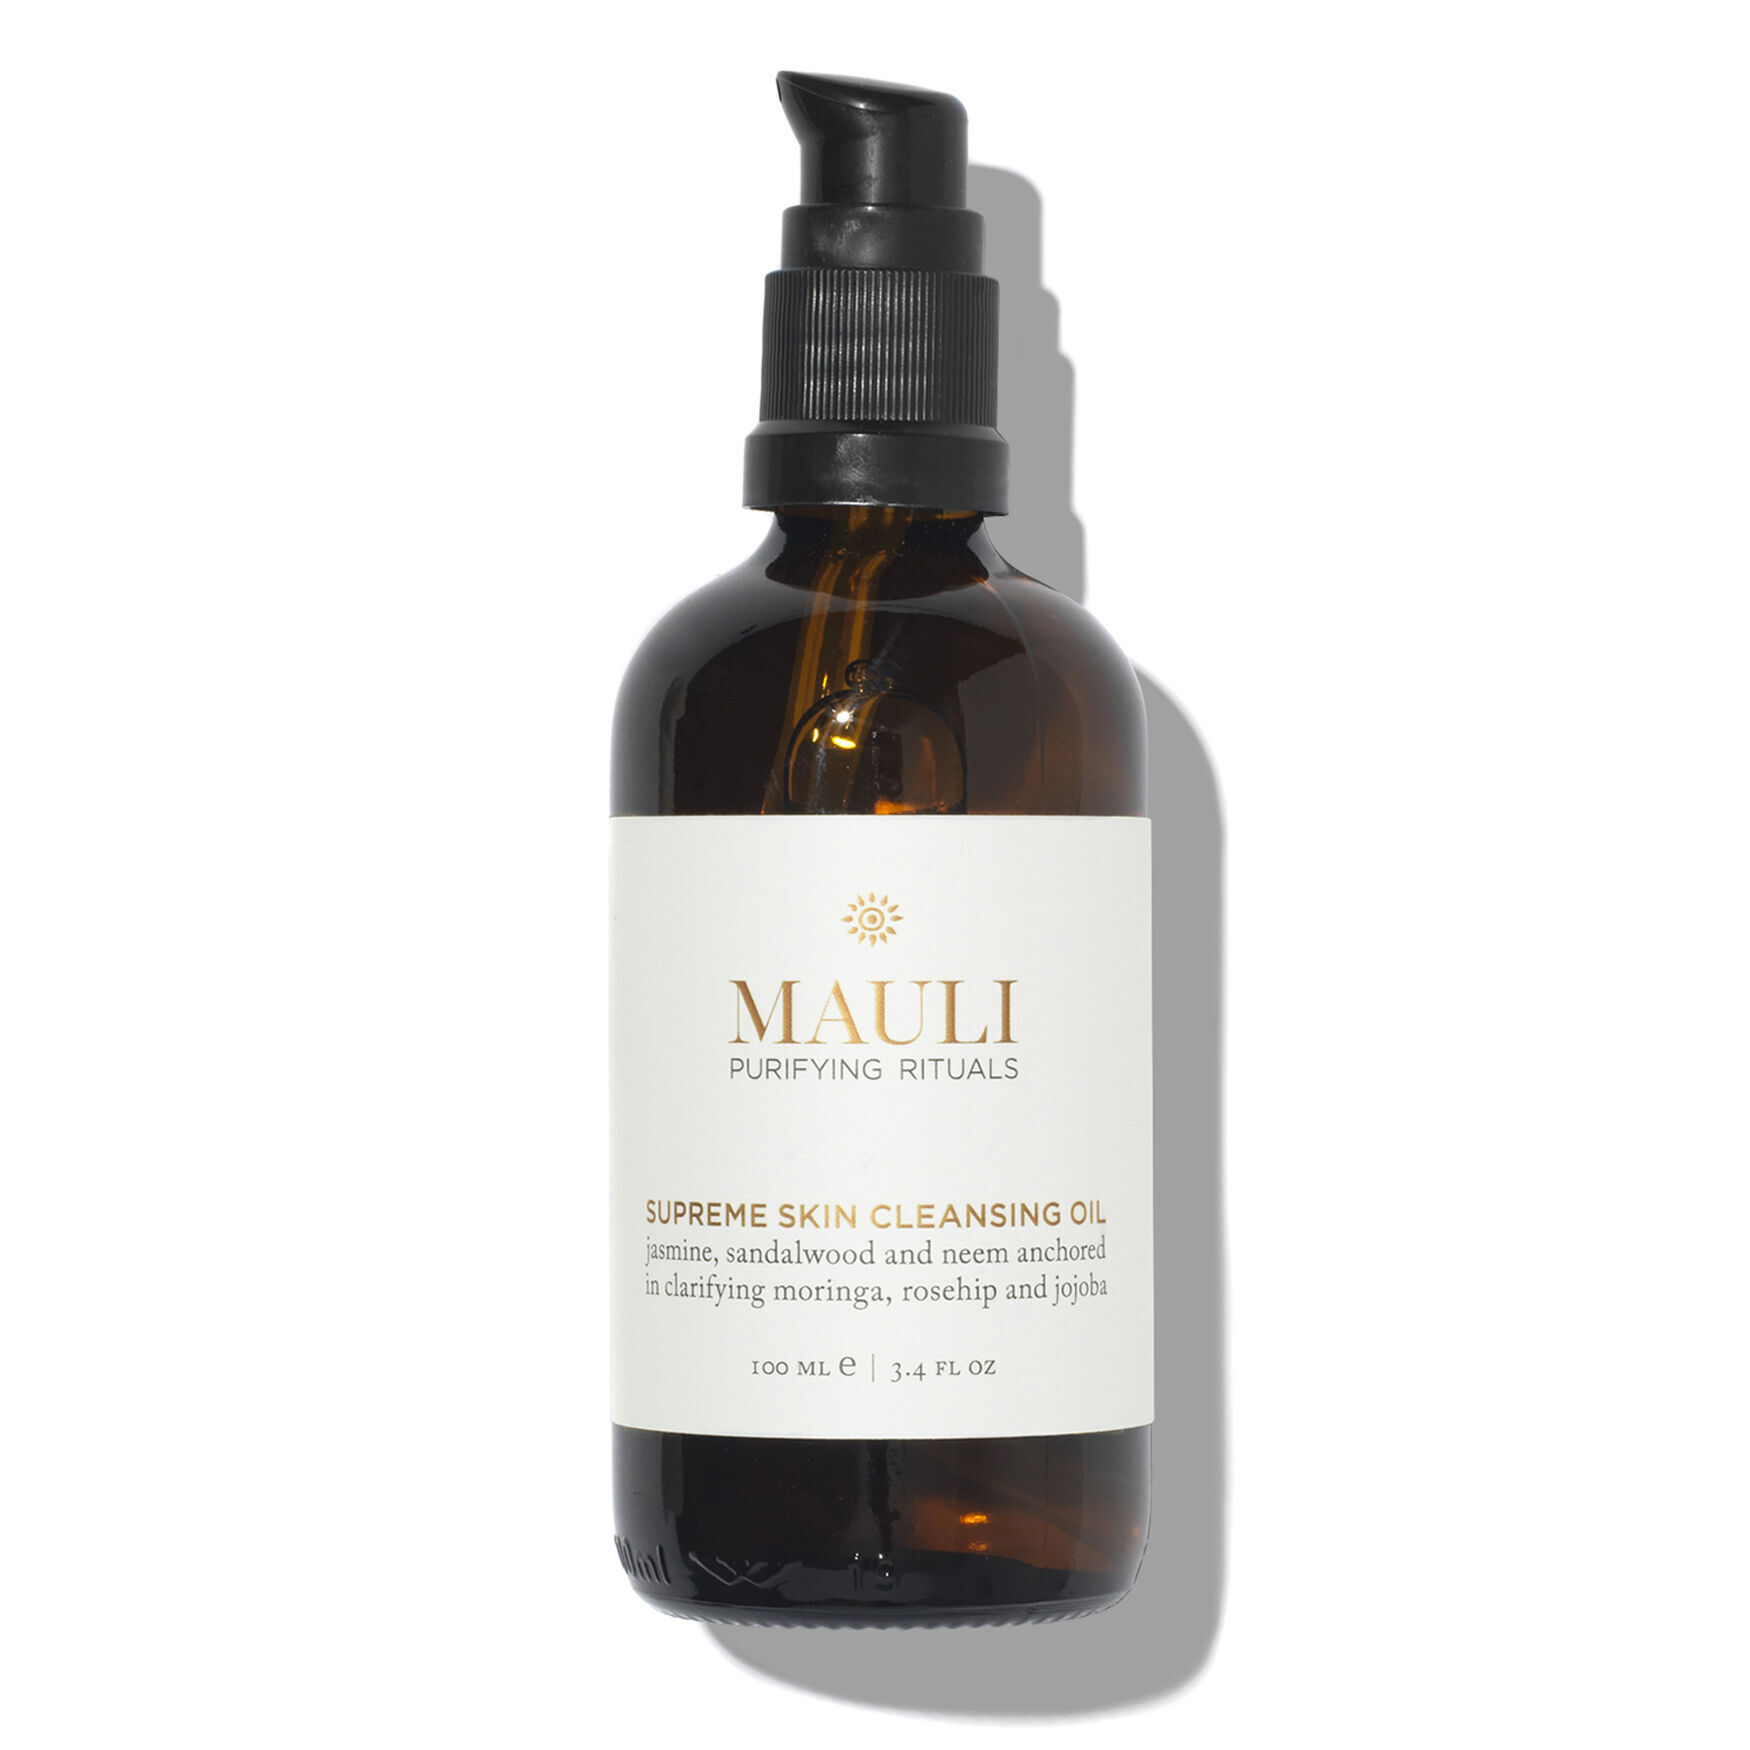 Mauli - Supreme Skin Cleansing Oil by Mauli